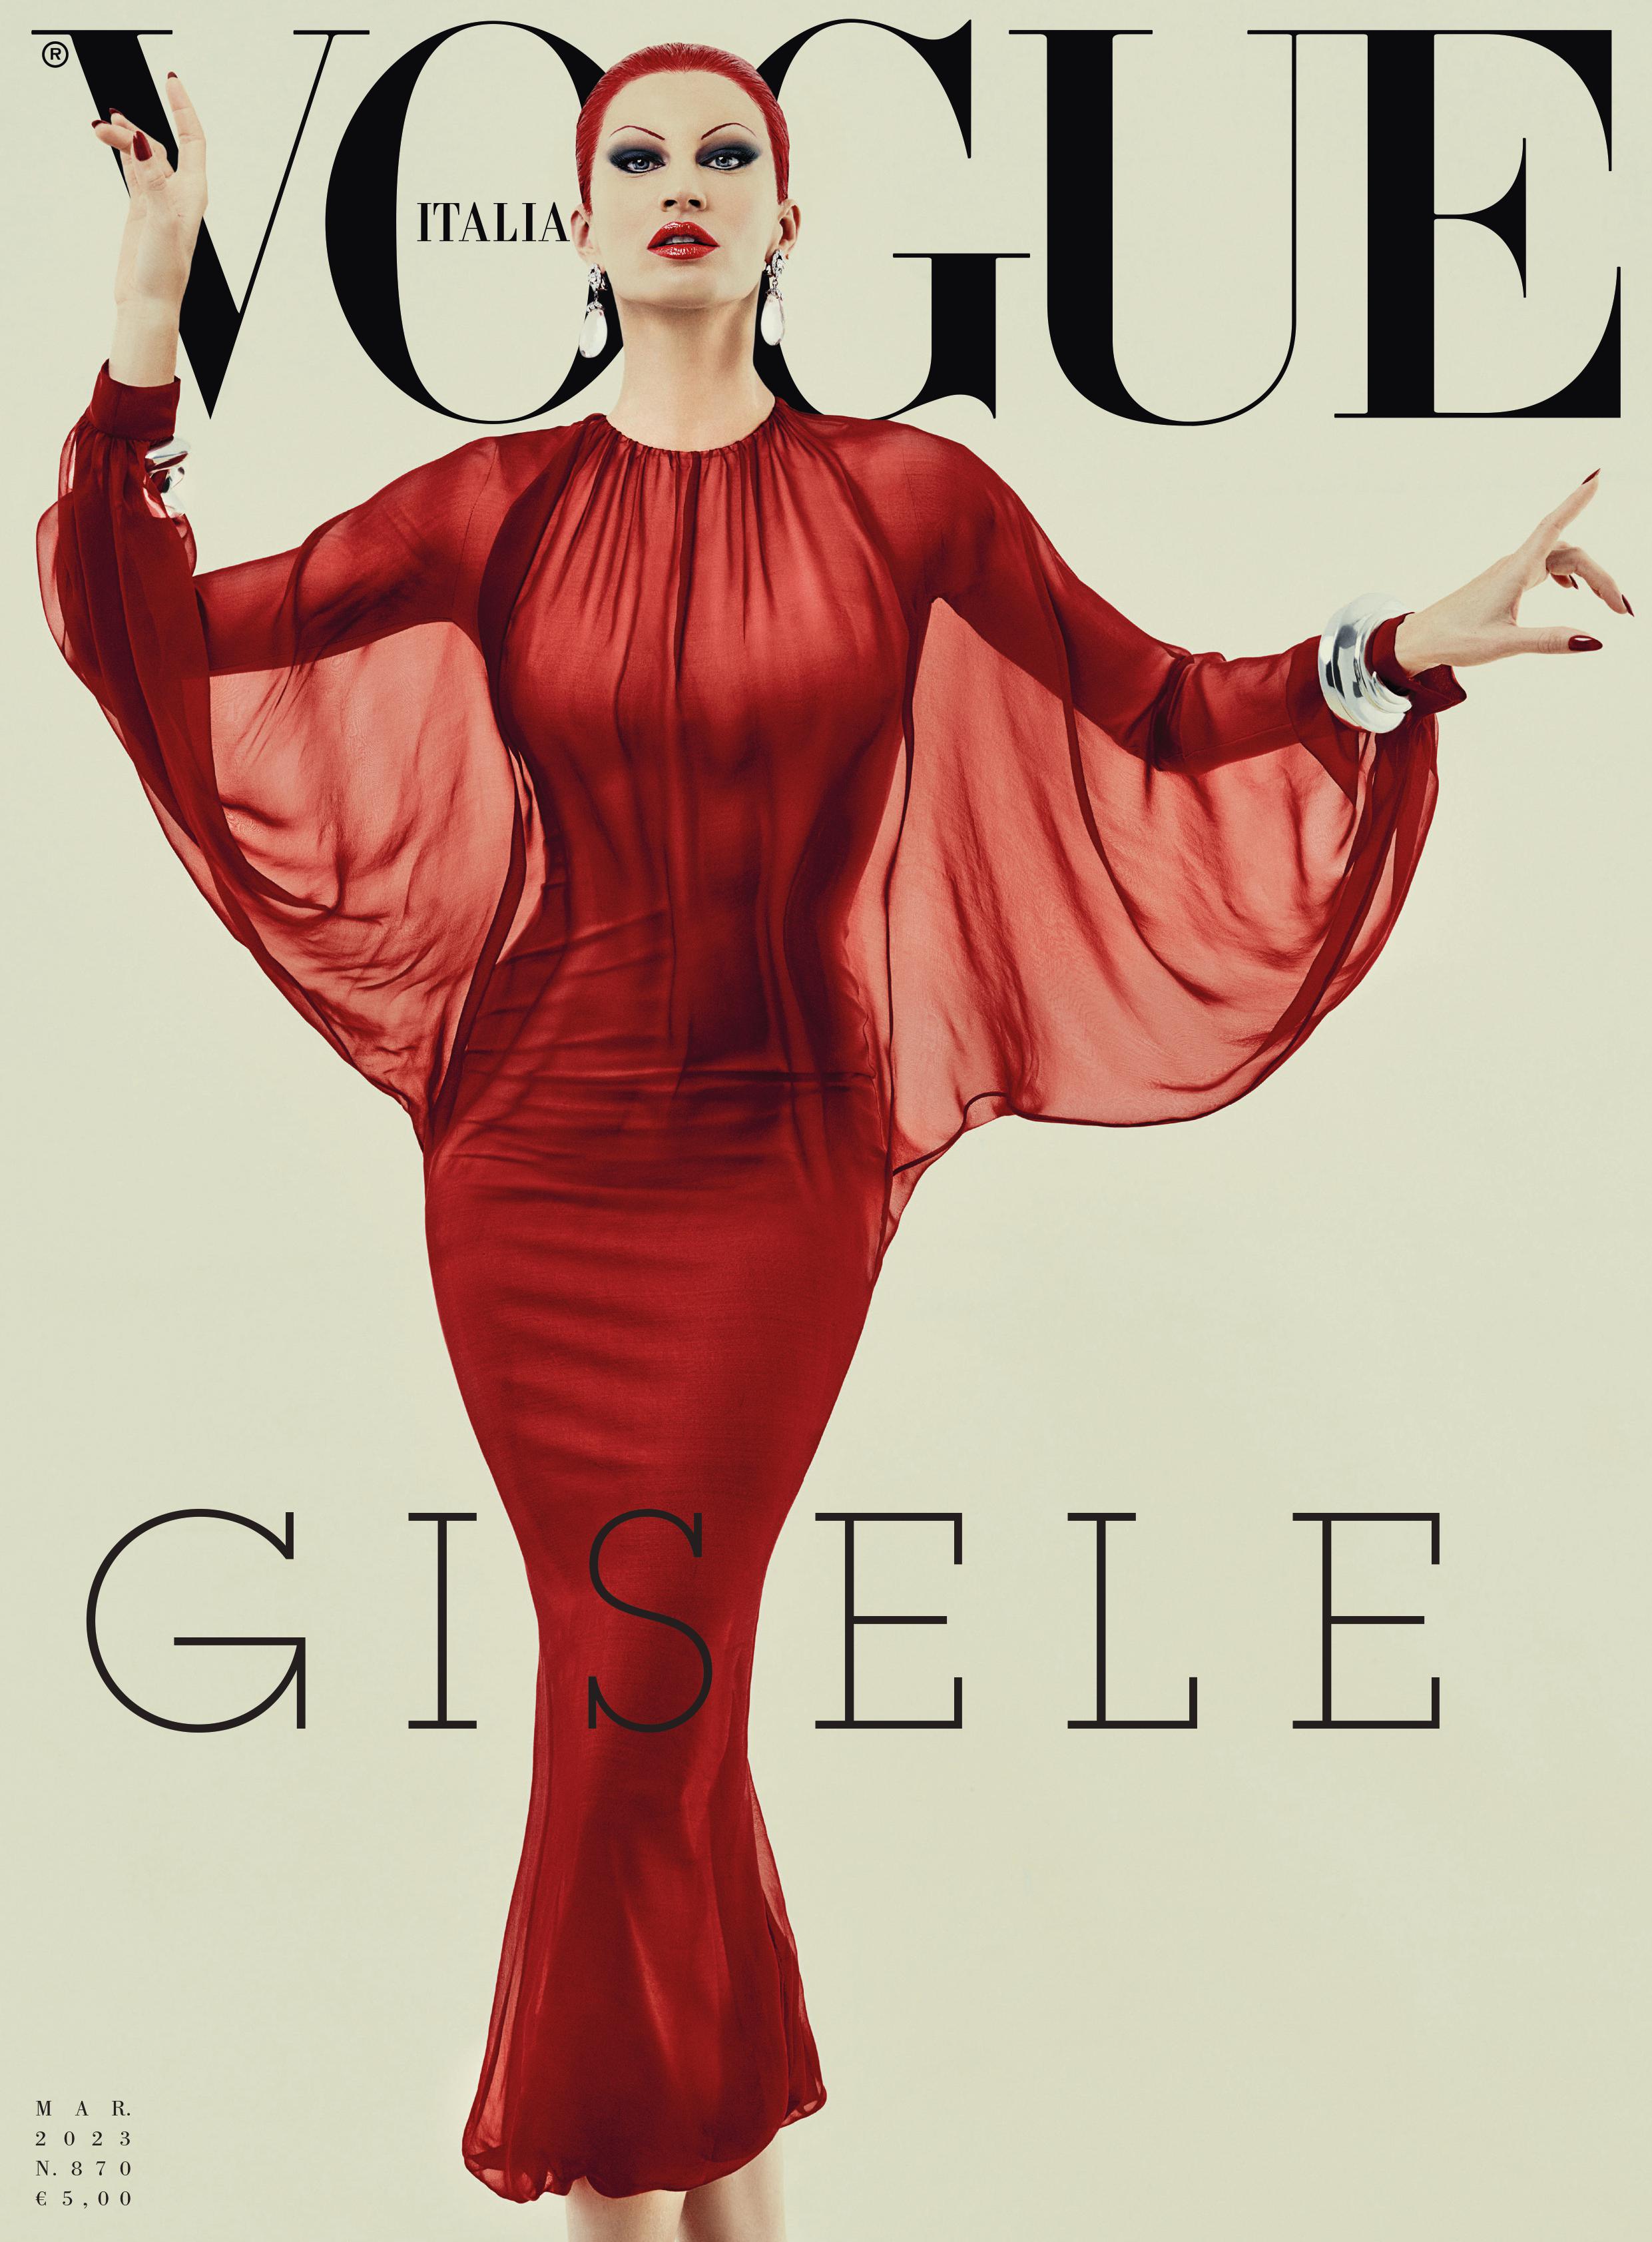 Gisele Bundchen’s March 2023 Vogue Italia cover